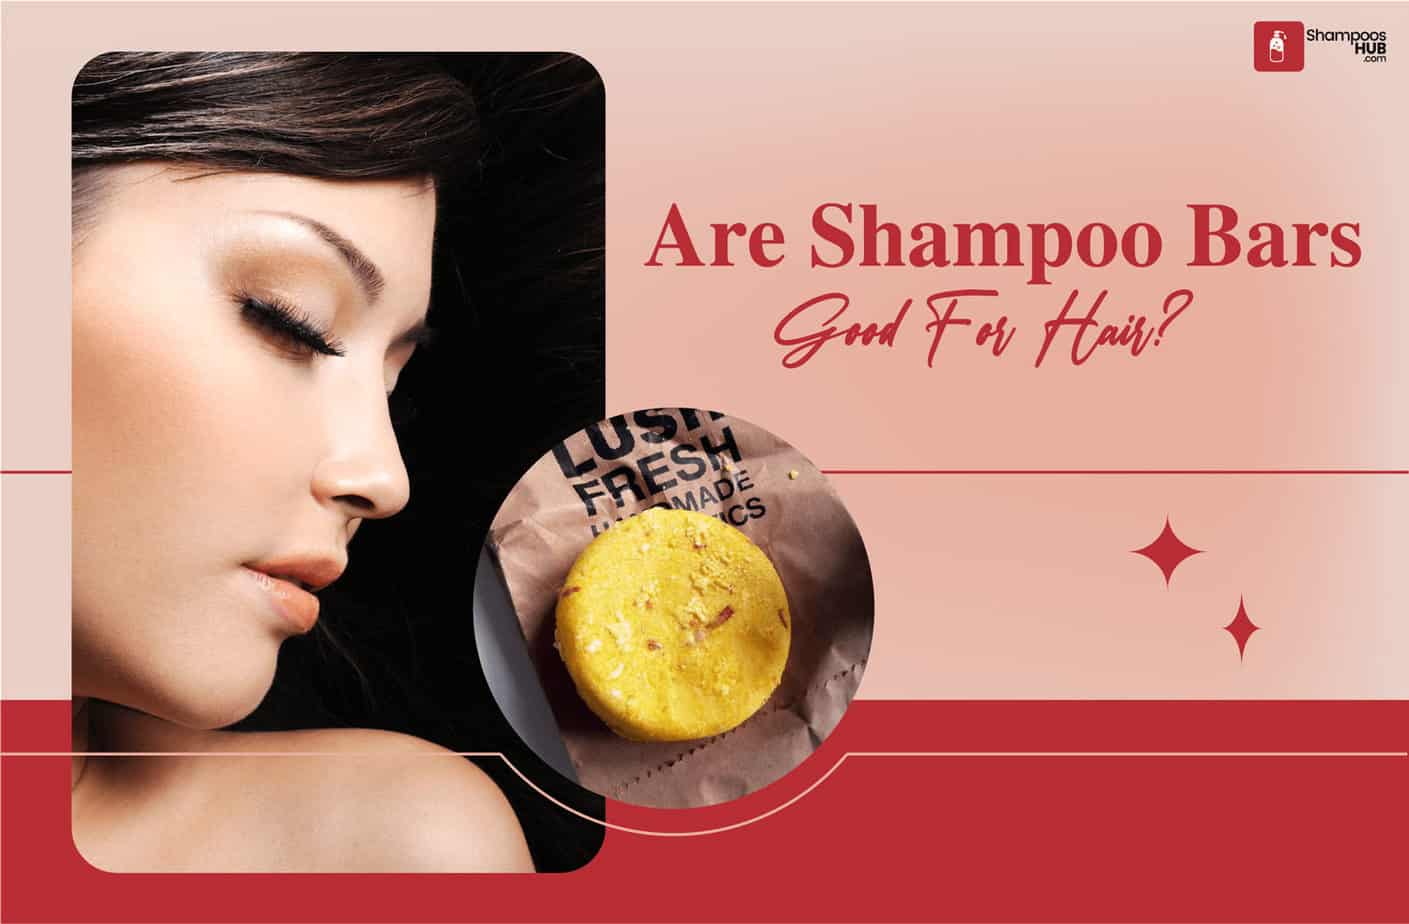 Are Shampoo Bars Good For Hair?